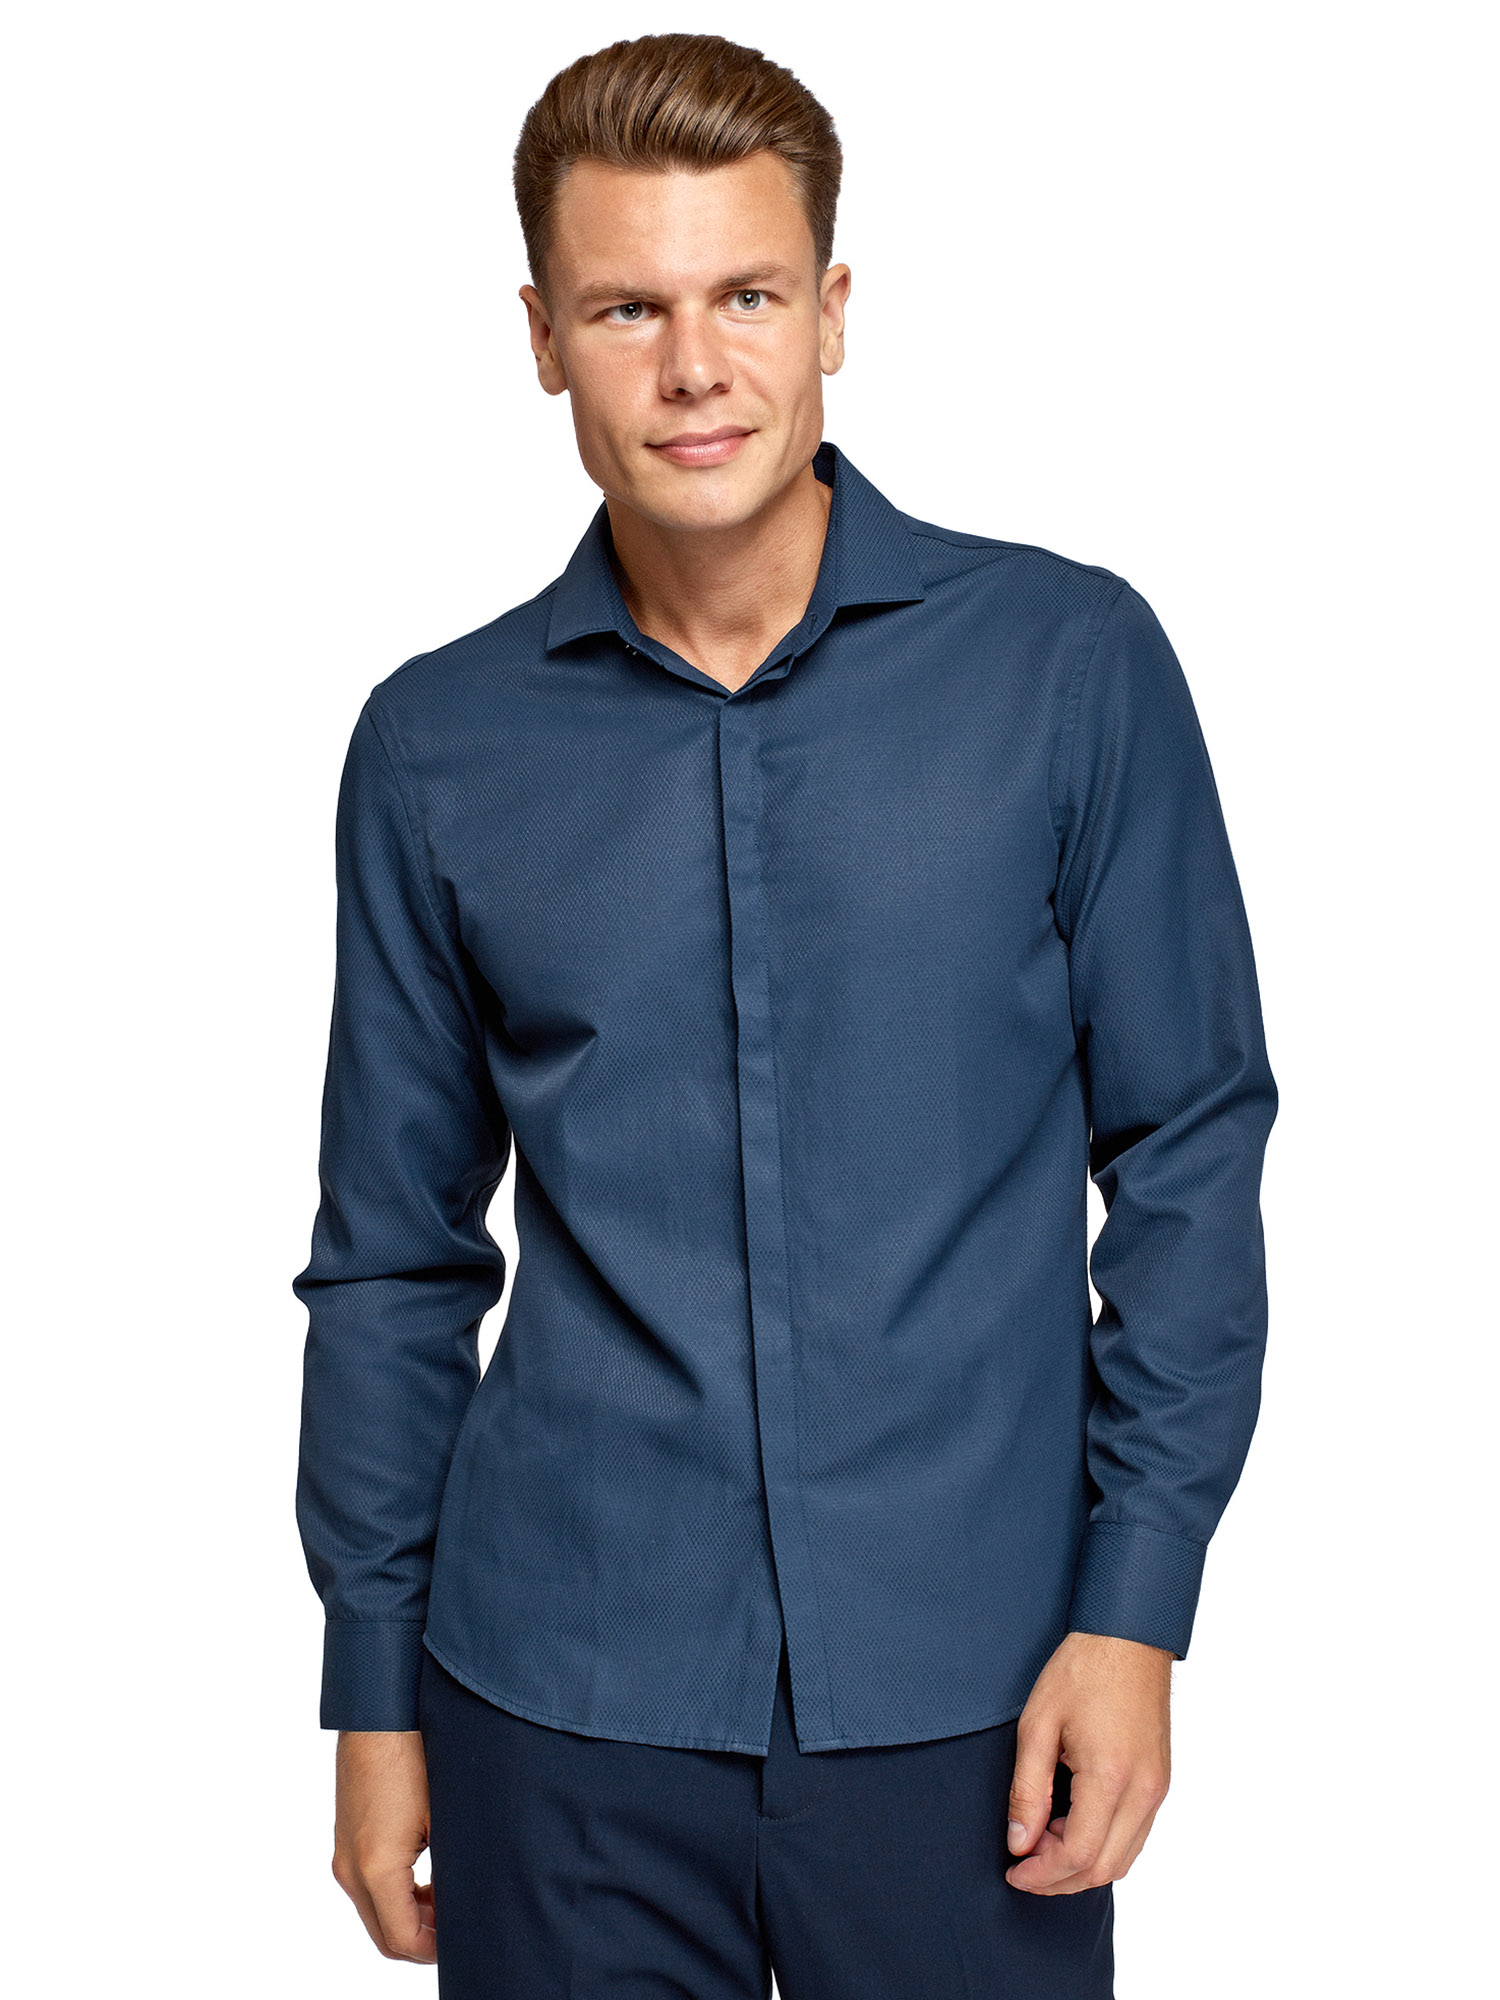 Рубашка мужская oodji 3B110017M-6 синяя XS